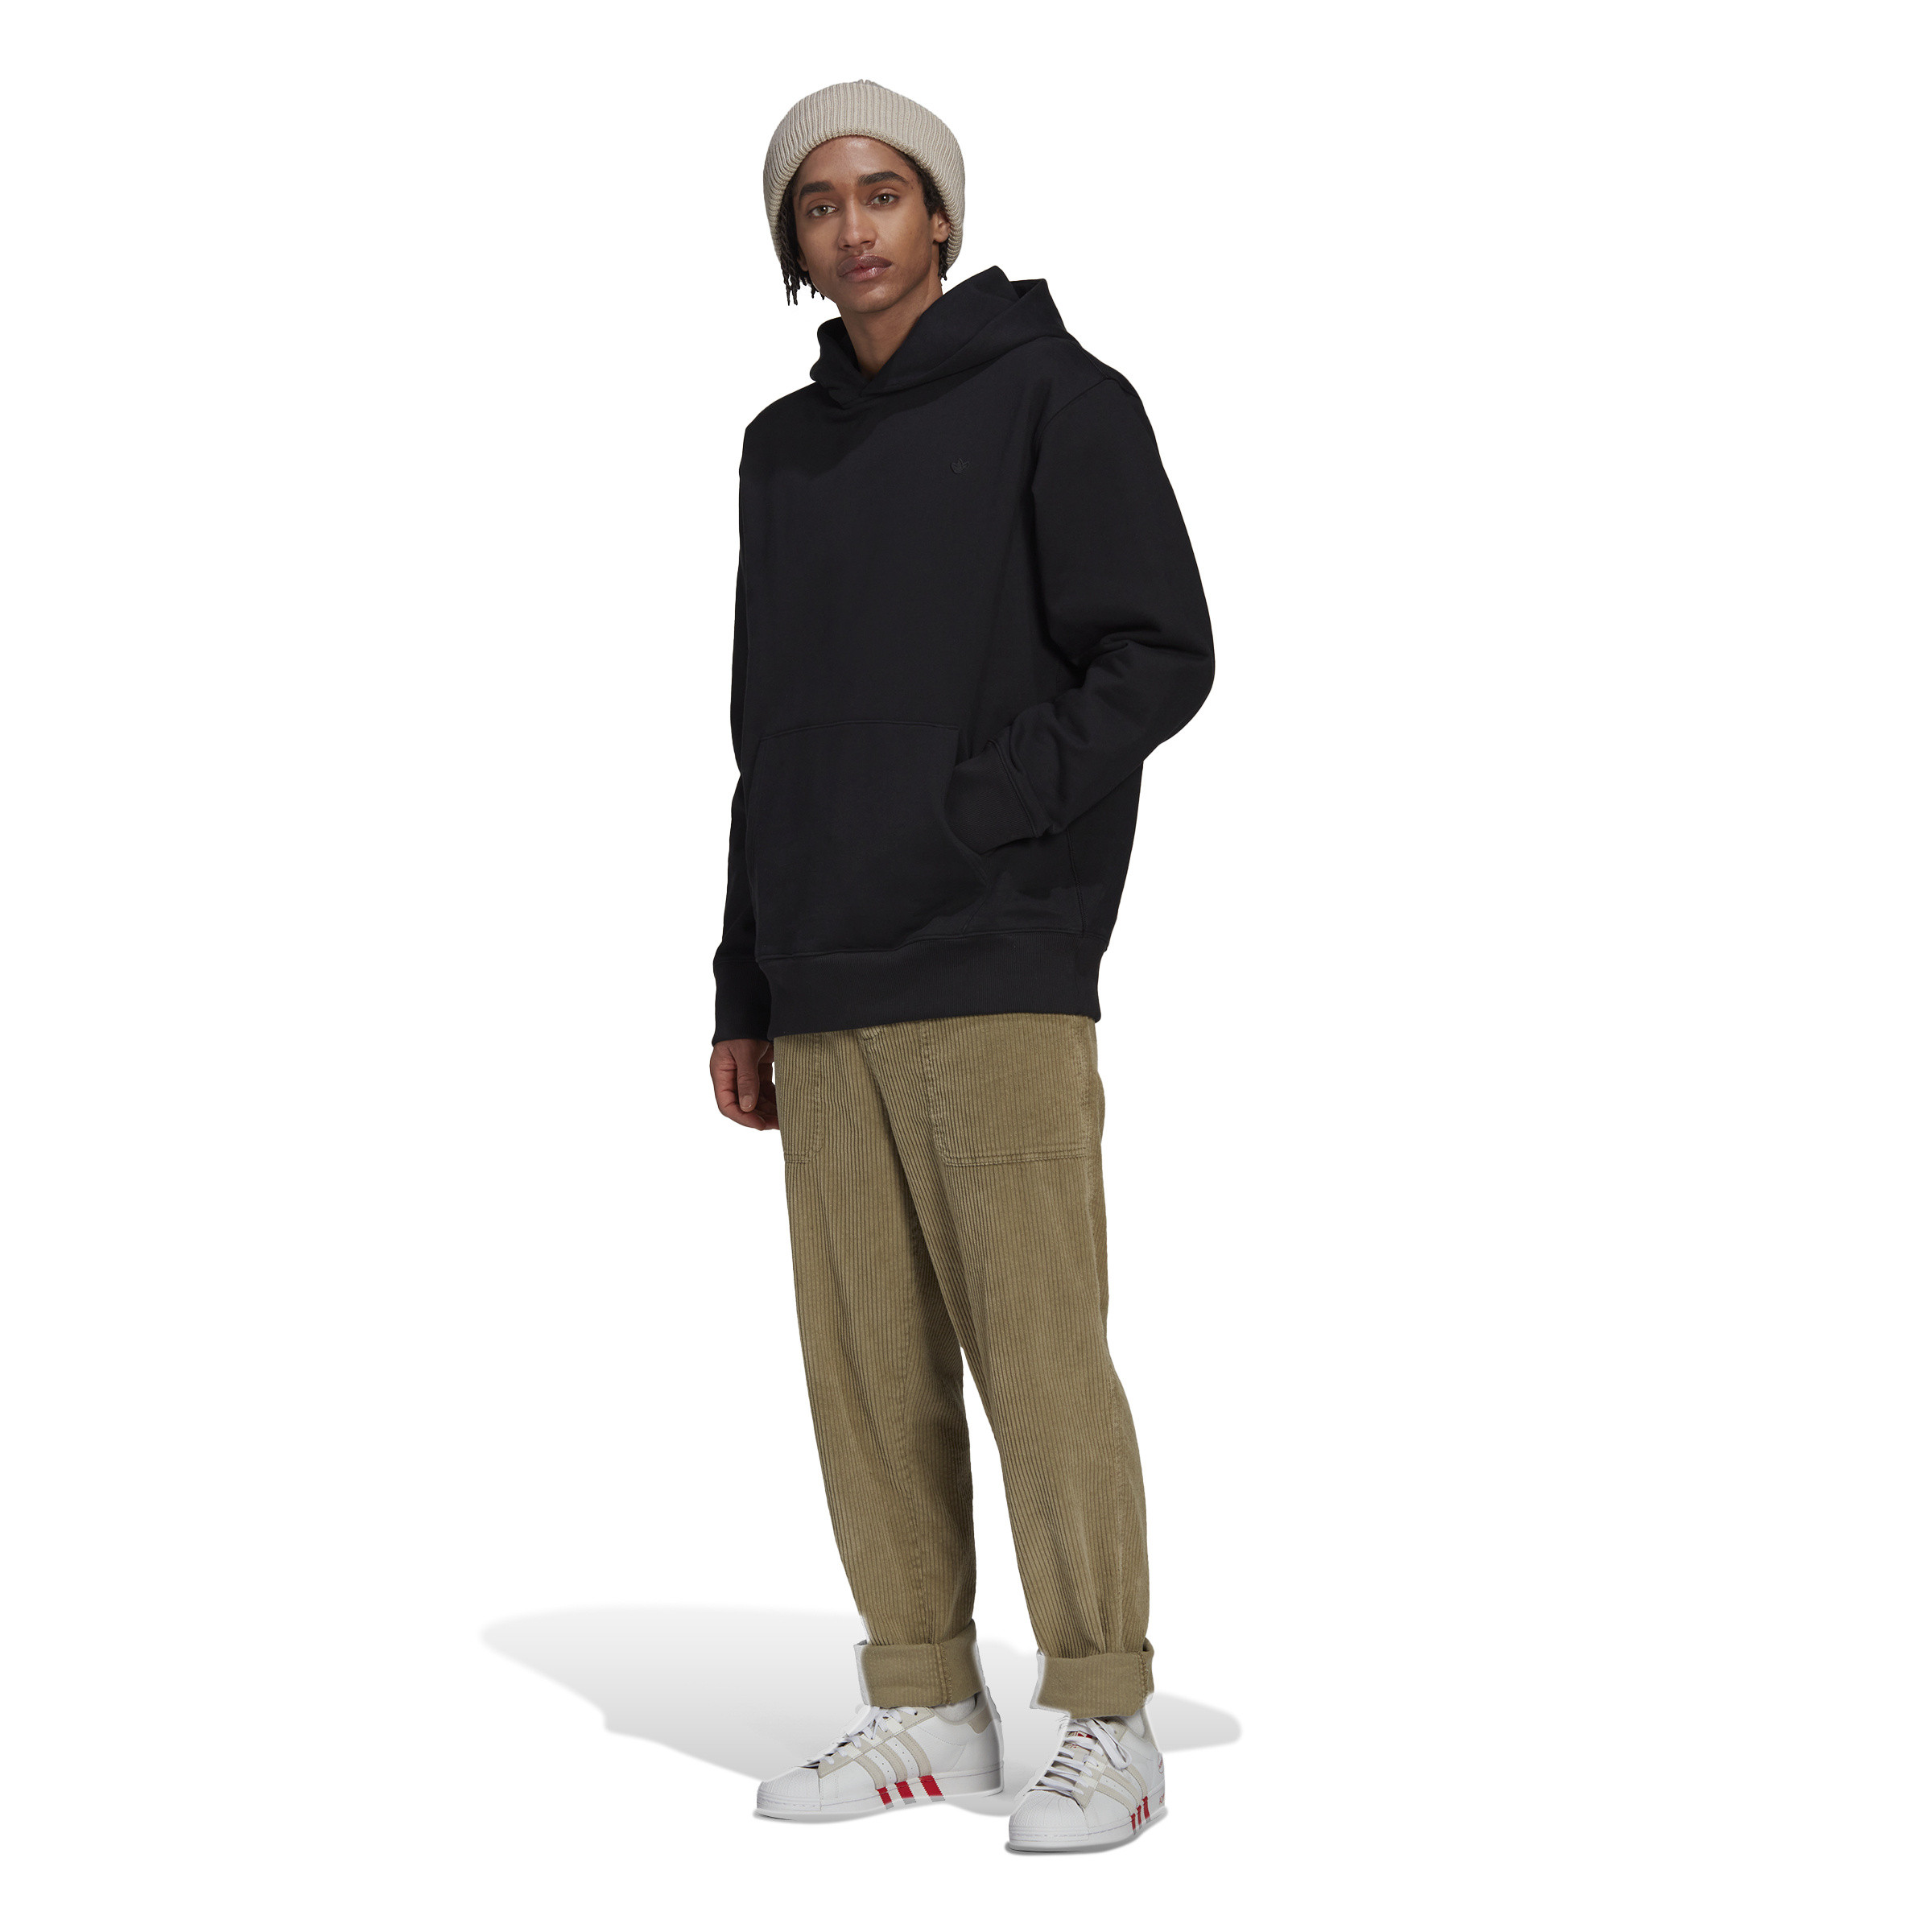 Adidas - Hooded sweatshirt adicolor, Black, large image number 6